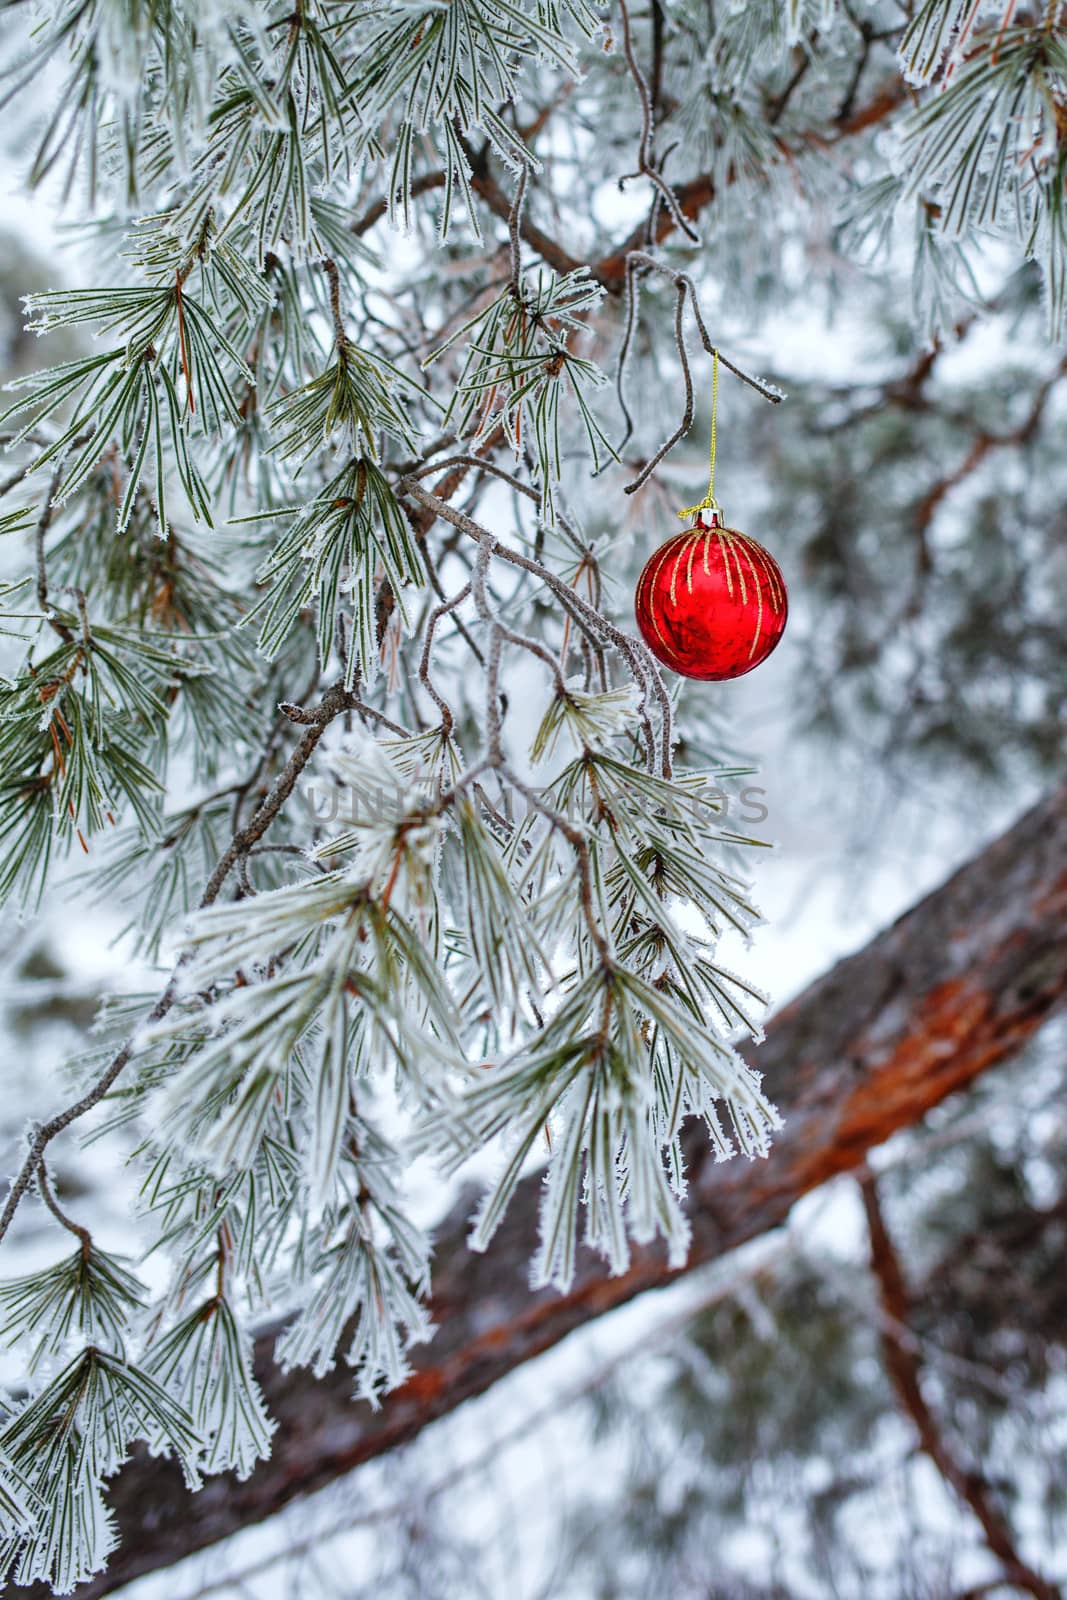 Red Christmas ball by Vagengeym